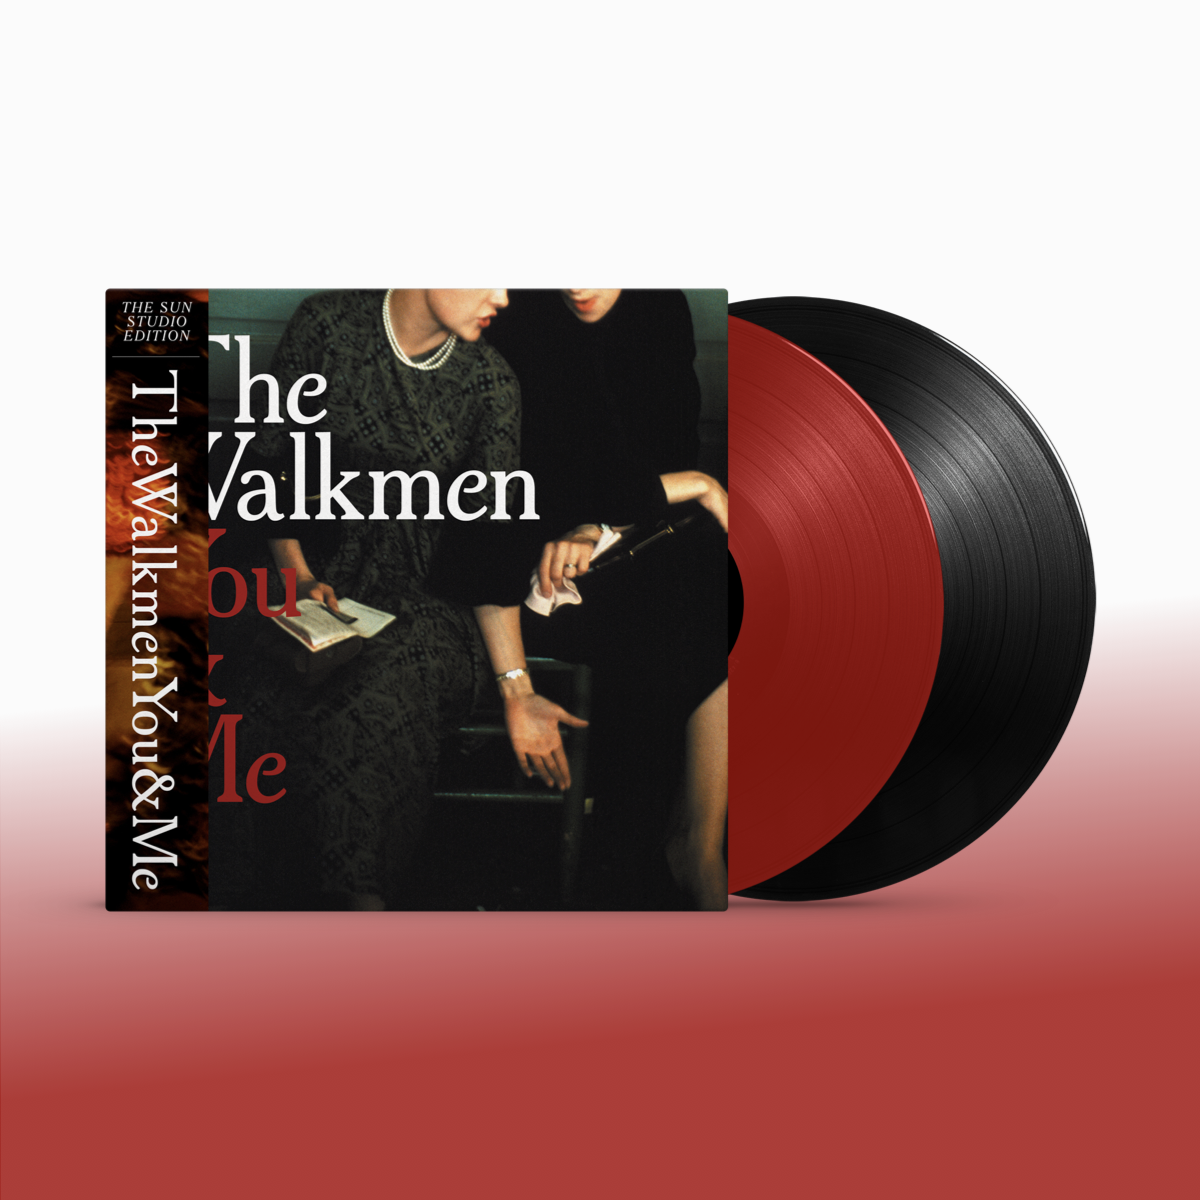 The Walkmen - You & Me: Sun Studio Edition (Red & Black Vinyl)